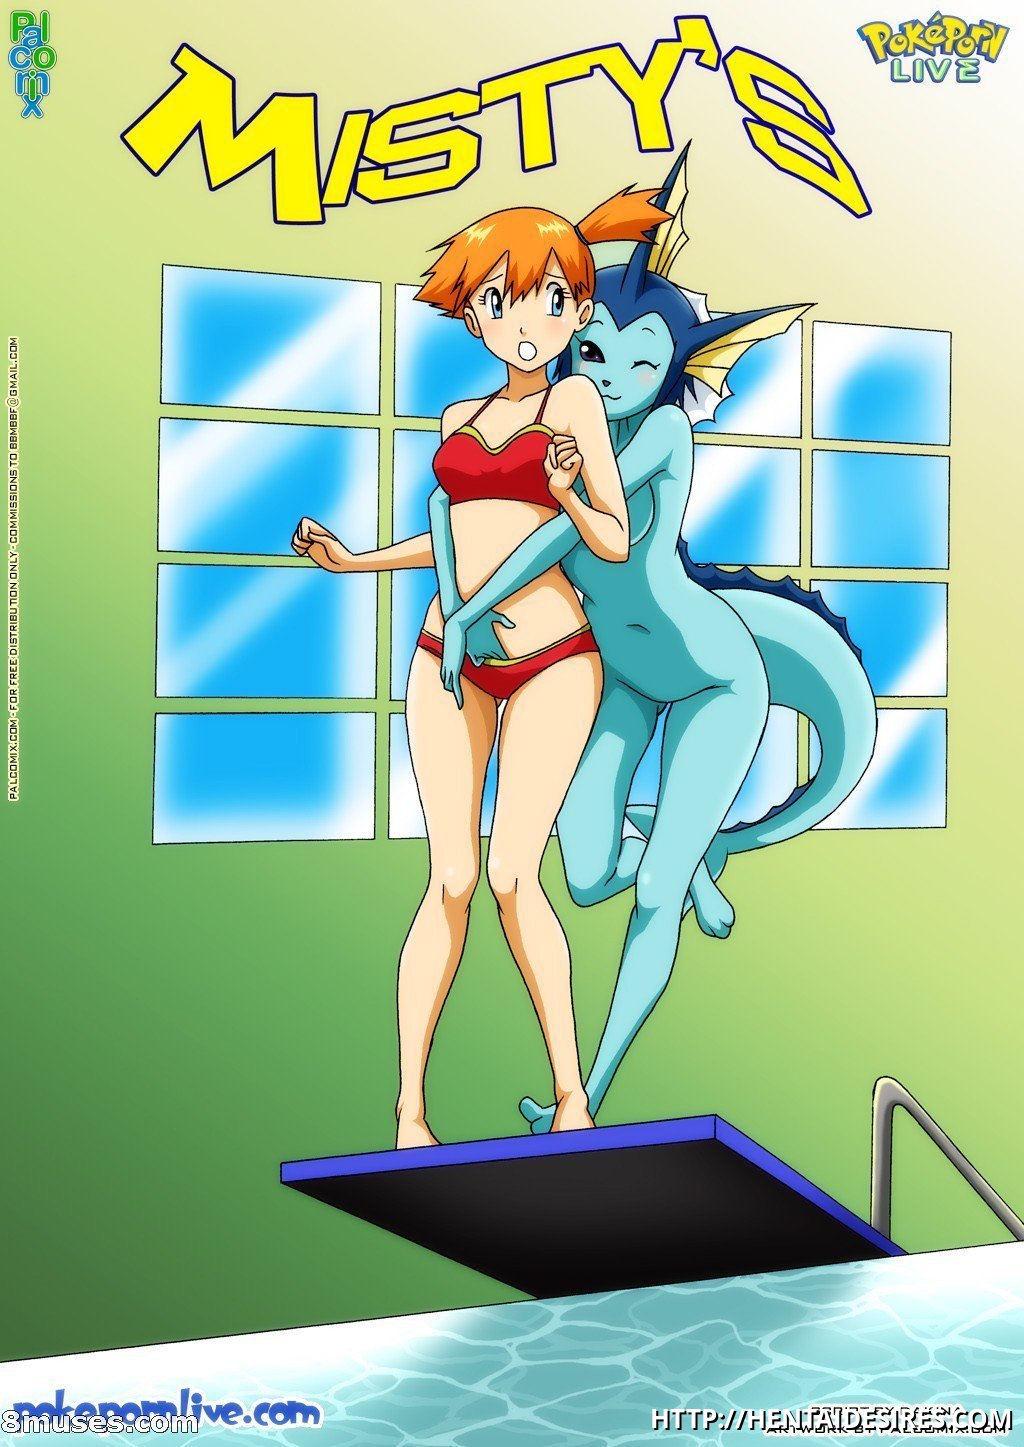 Lesbian Cartoon Porn Pokemon - Sexy Misty's like lesbian hot sex â€“ Pokemon Hentai